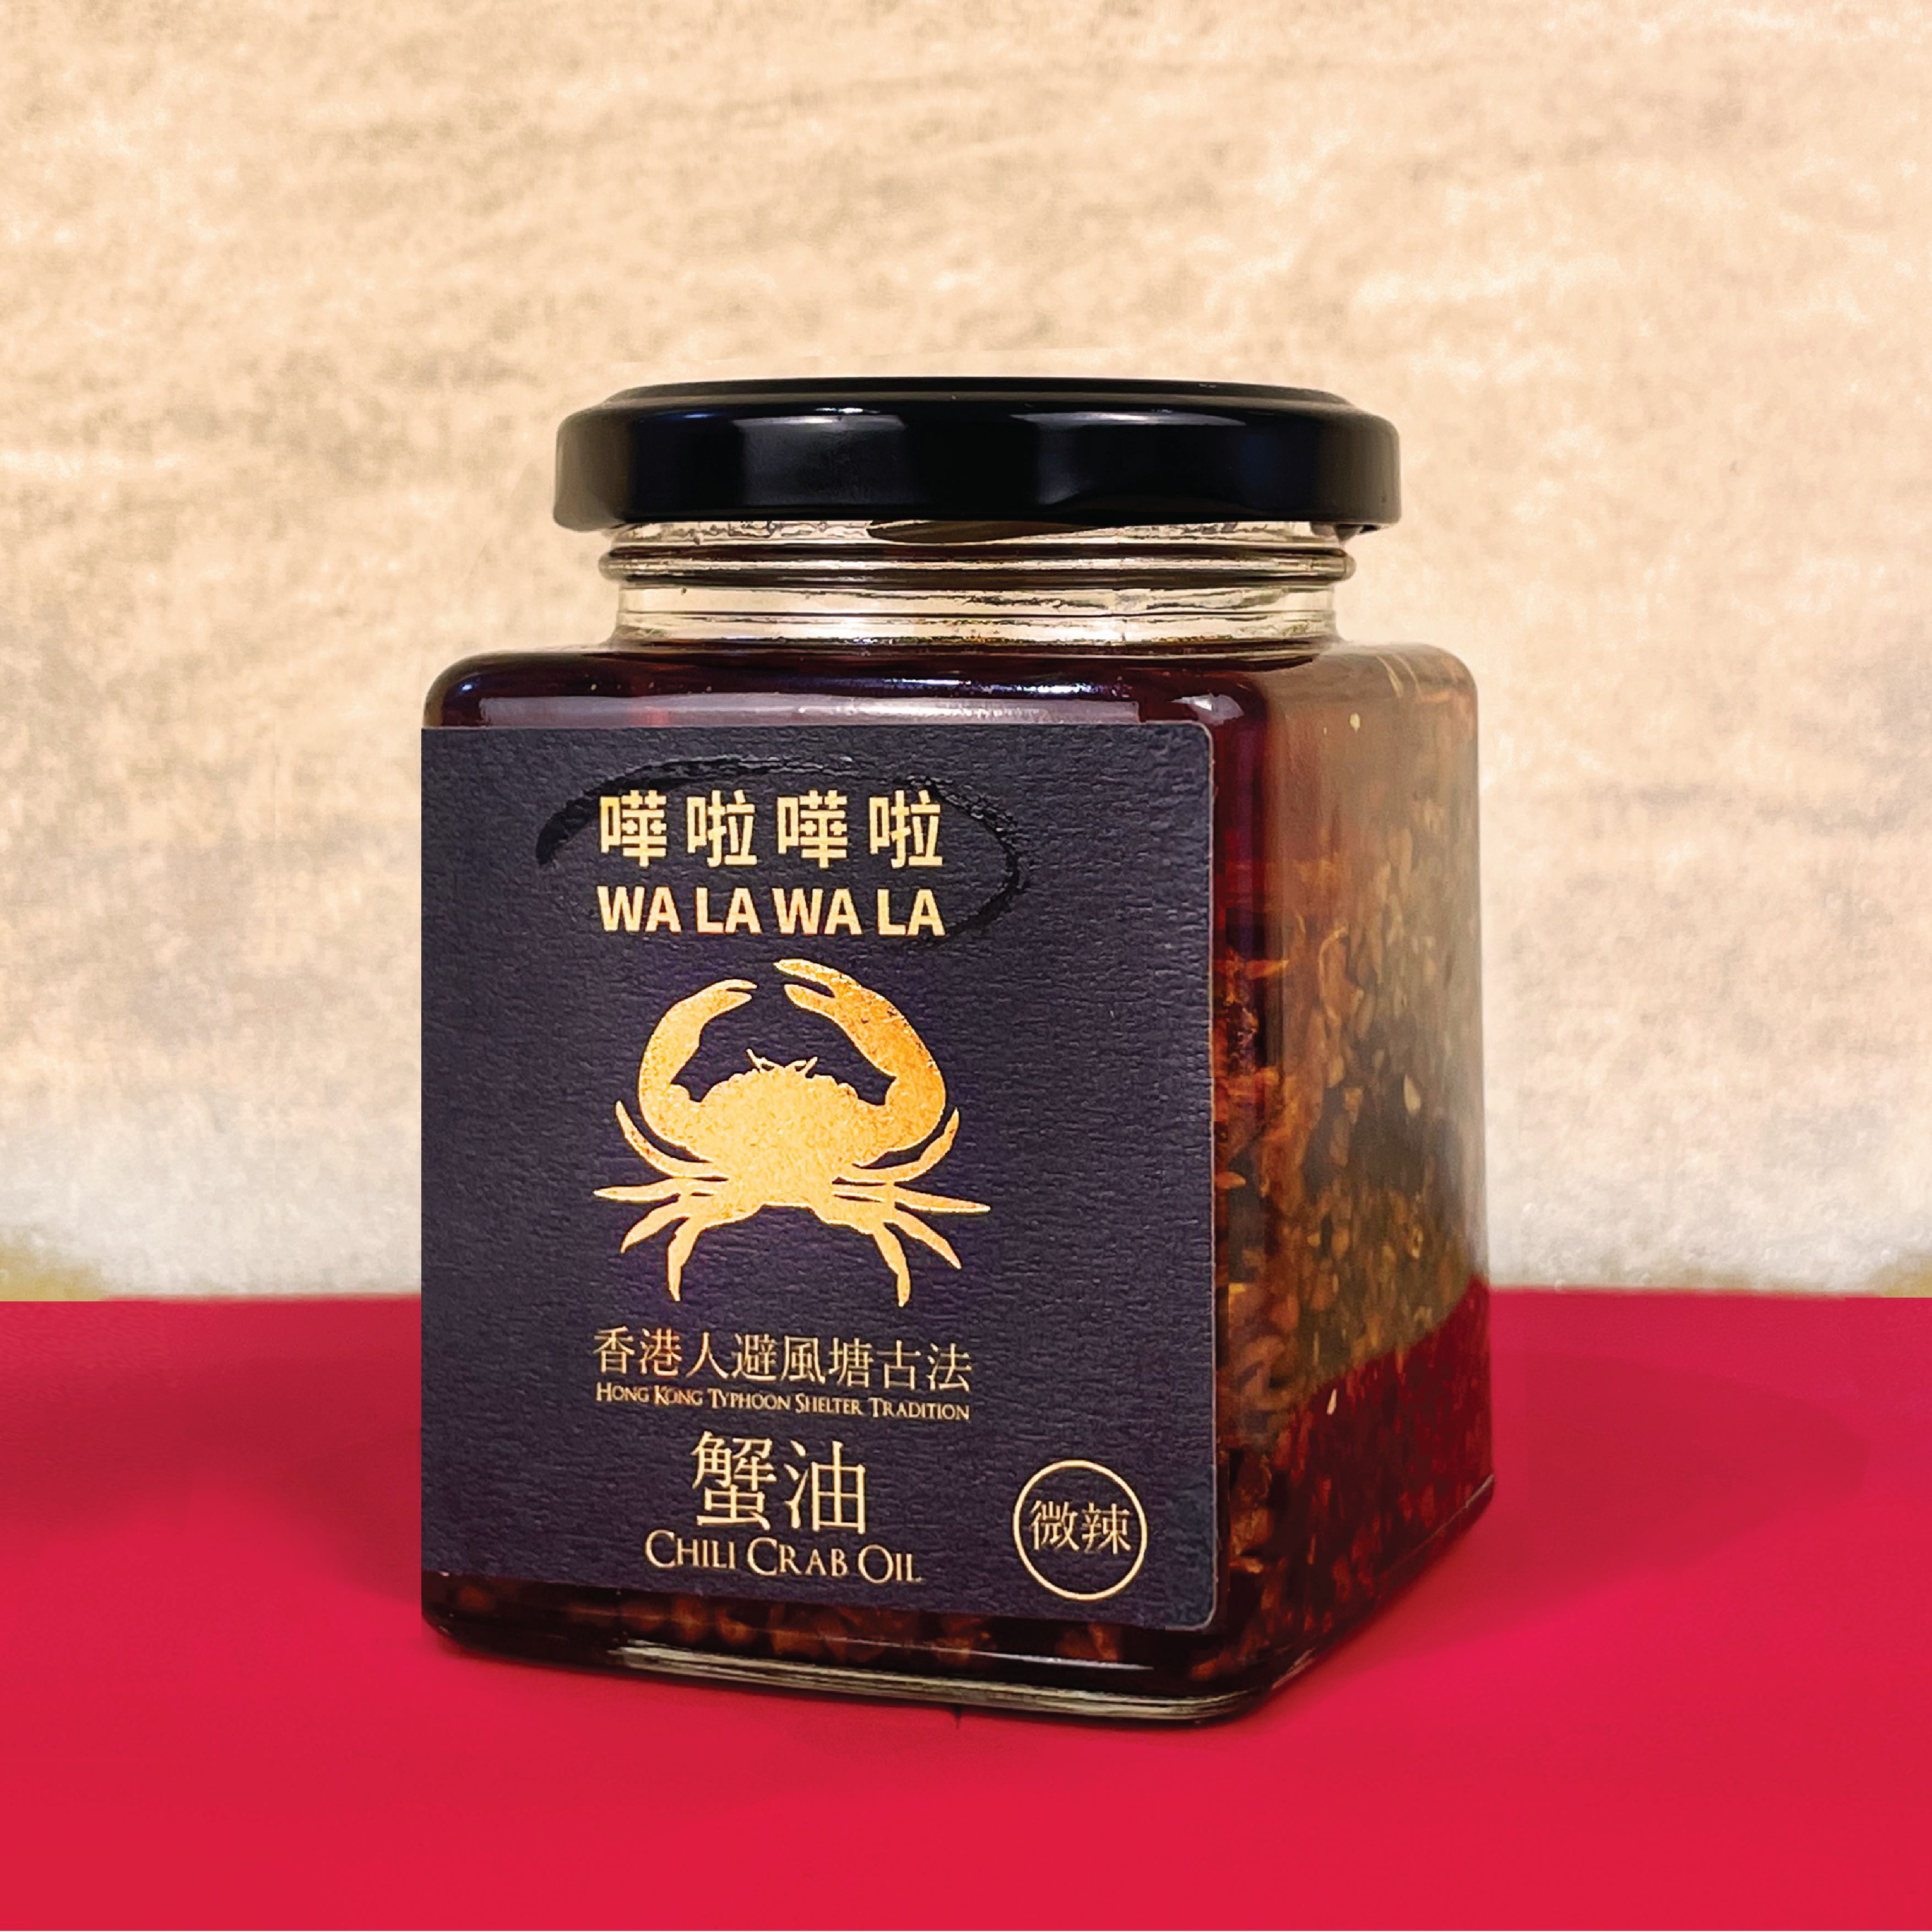 Walawala Chili Crab Oil - Mild